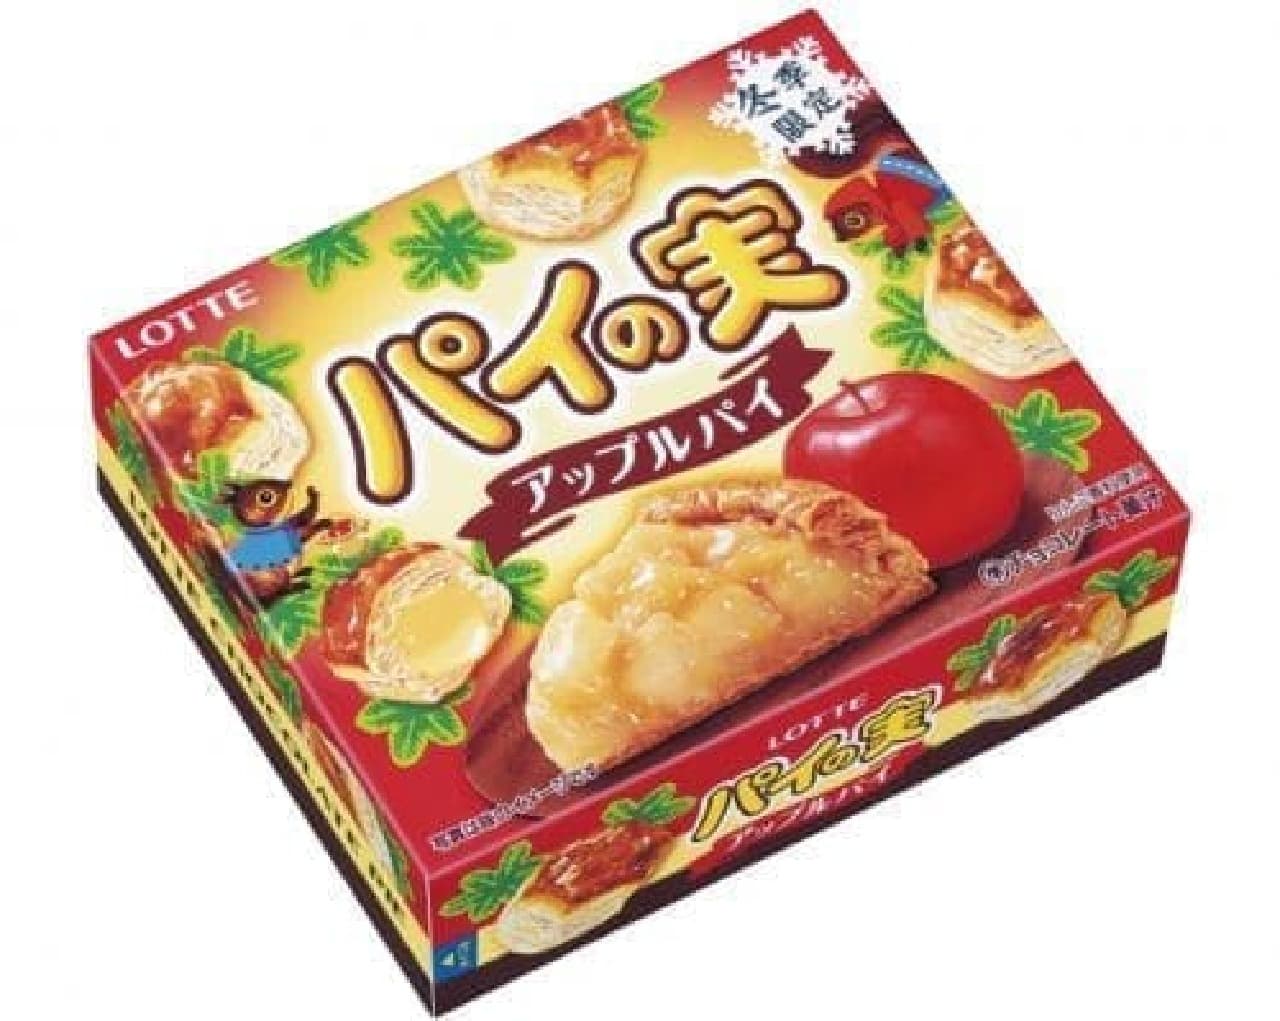 Lotte "Pie Fruit [Apple Pie]"